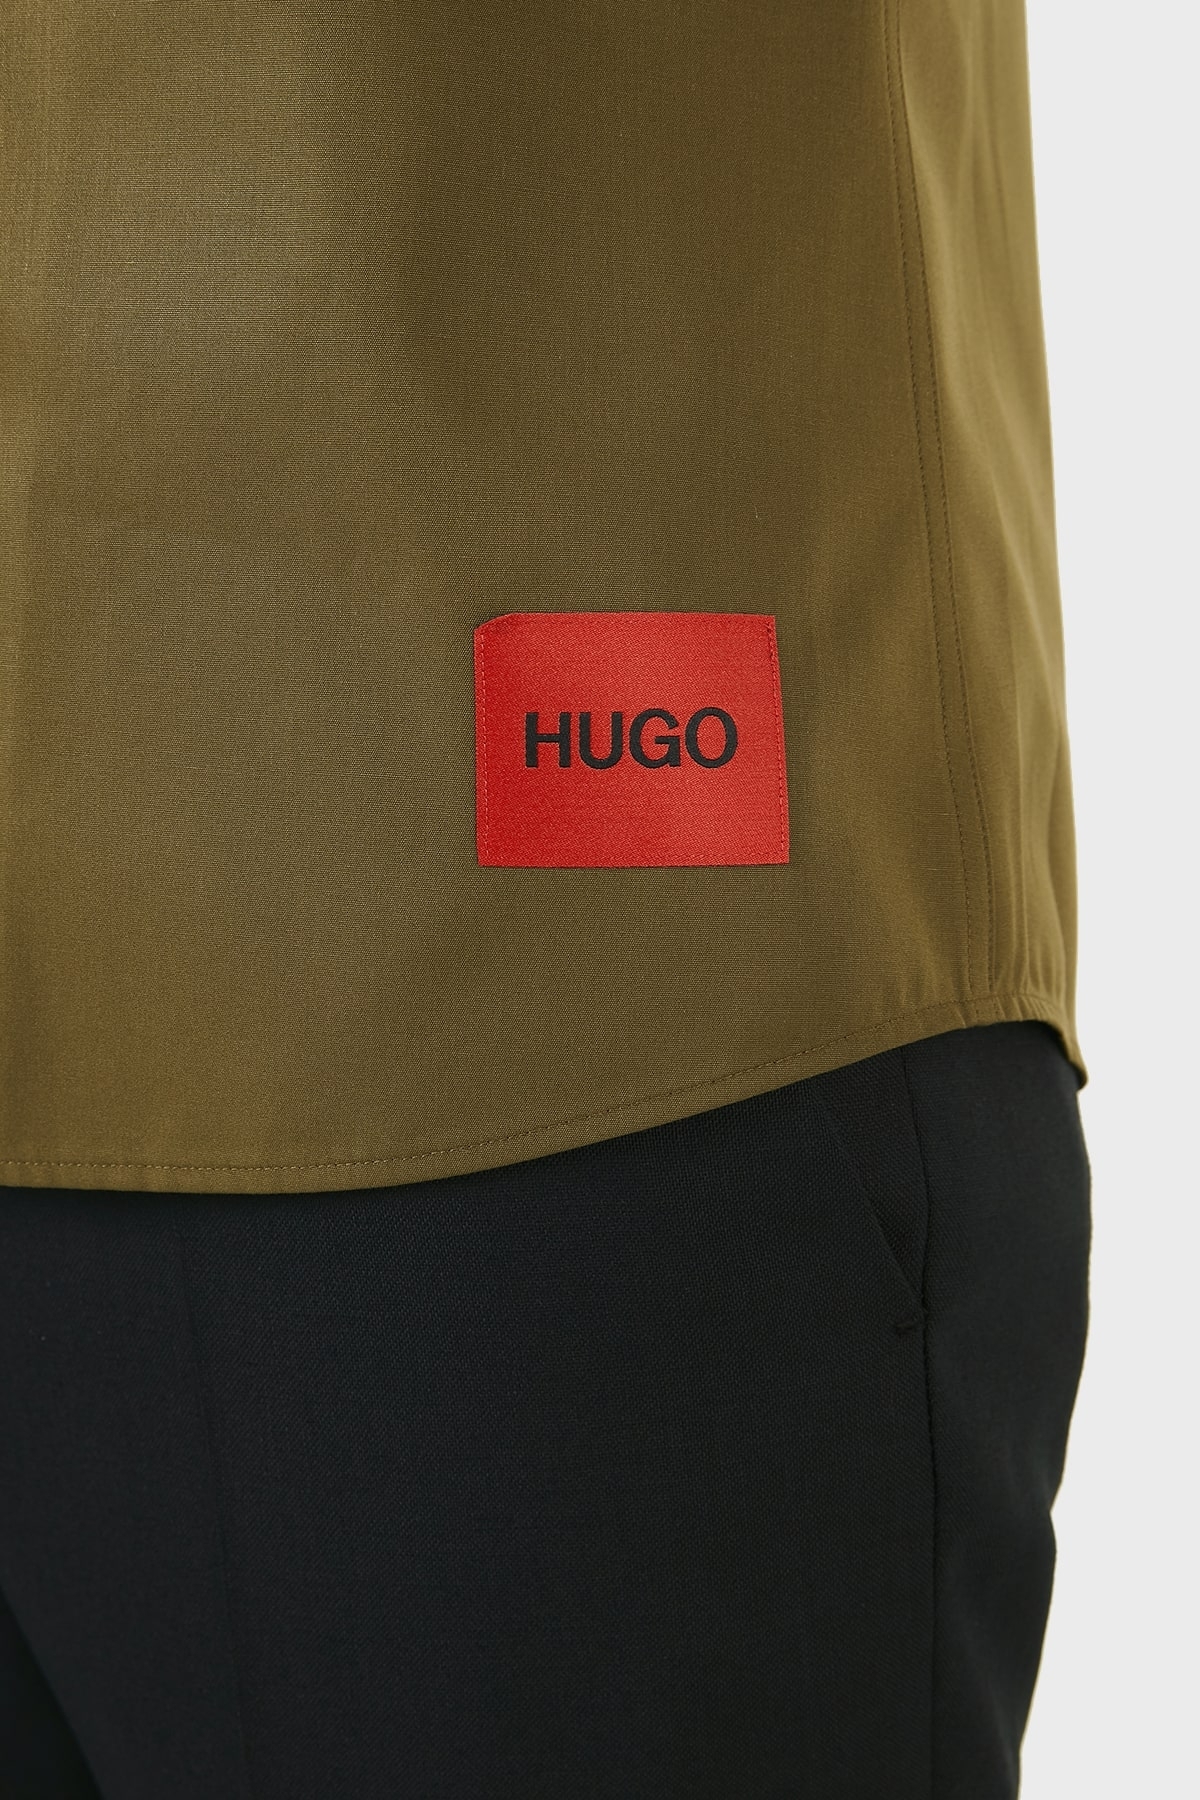 Hugo Boss Extra Slim Fit % 100 Pamuk Erkek Gömlek 50450179 355 HAKİ